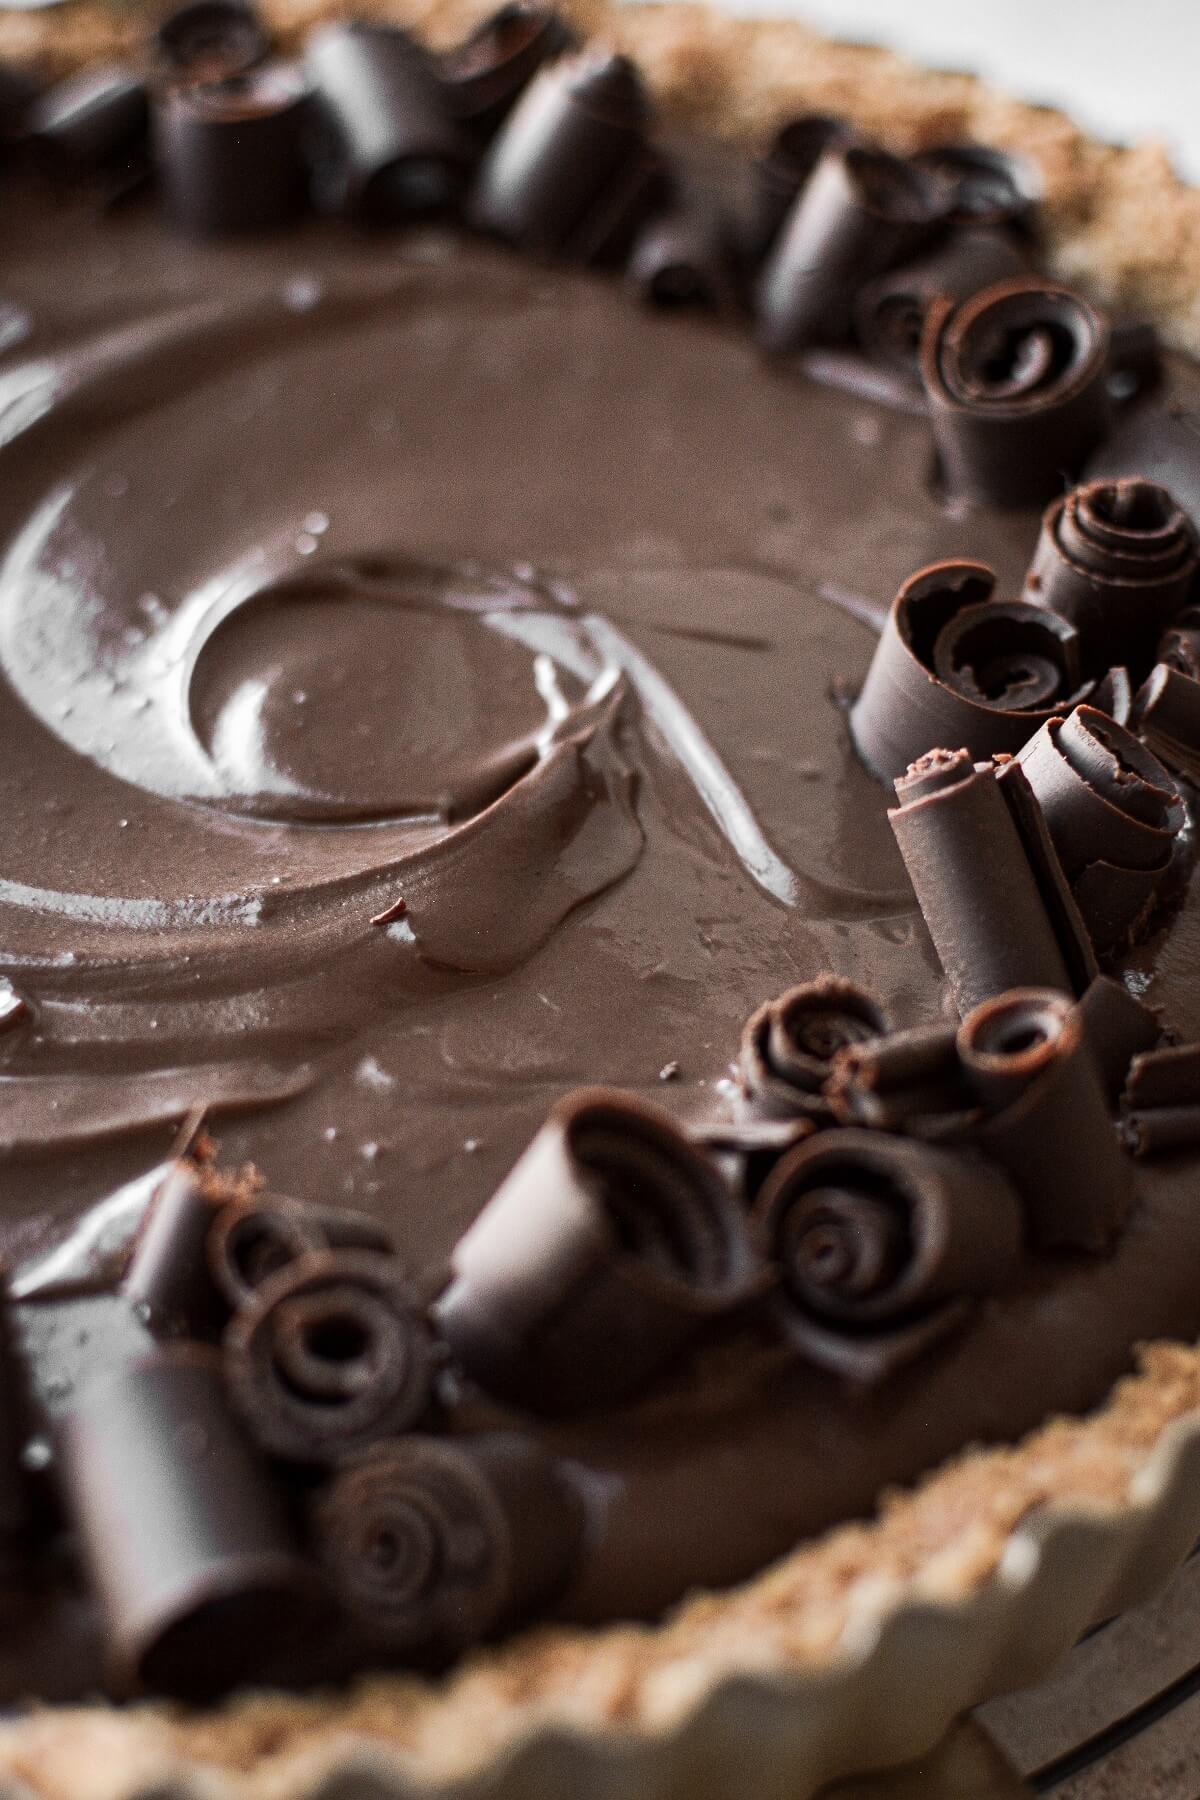 Closeup of chocolate curls on a chocolate cream pie.